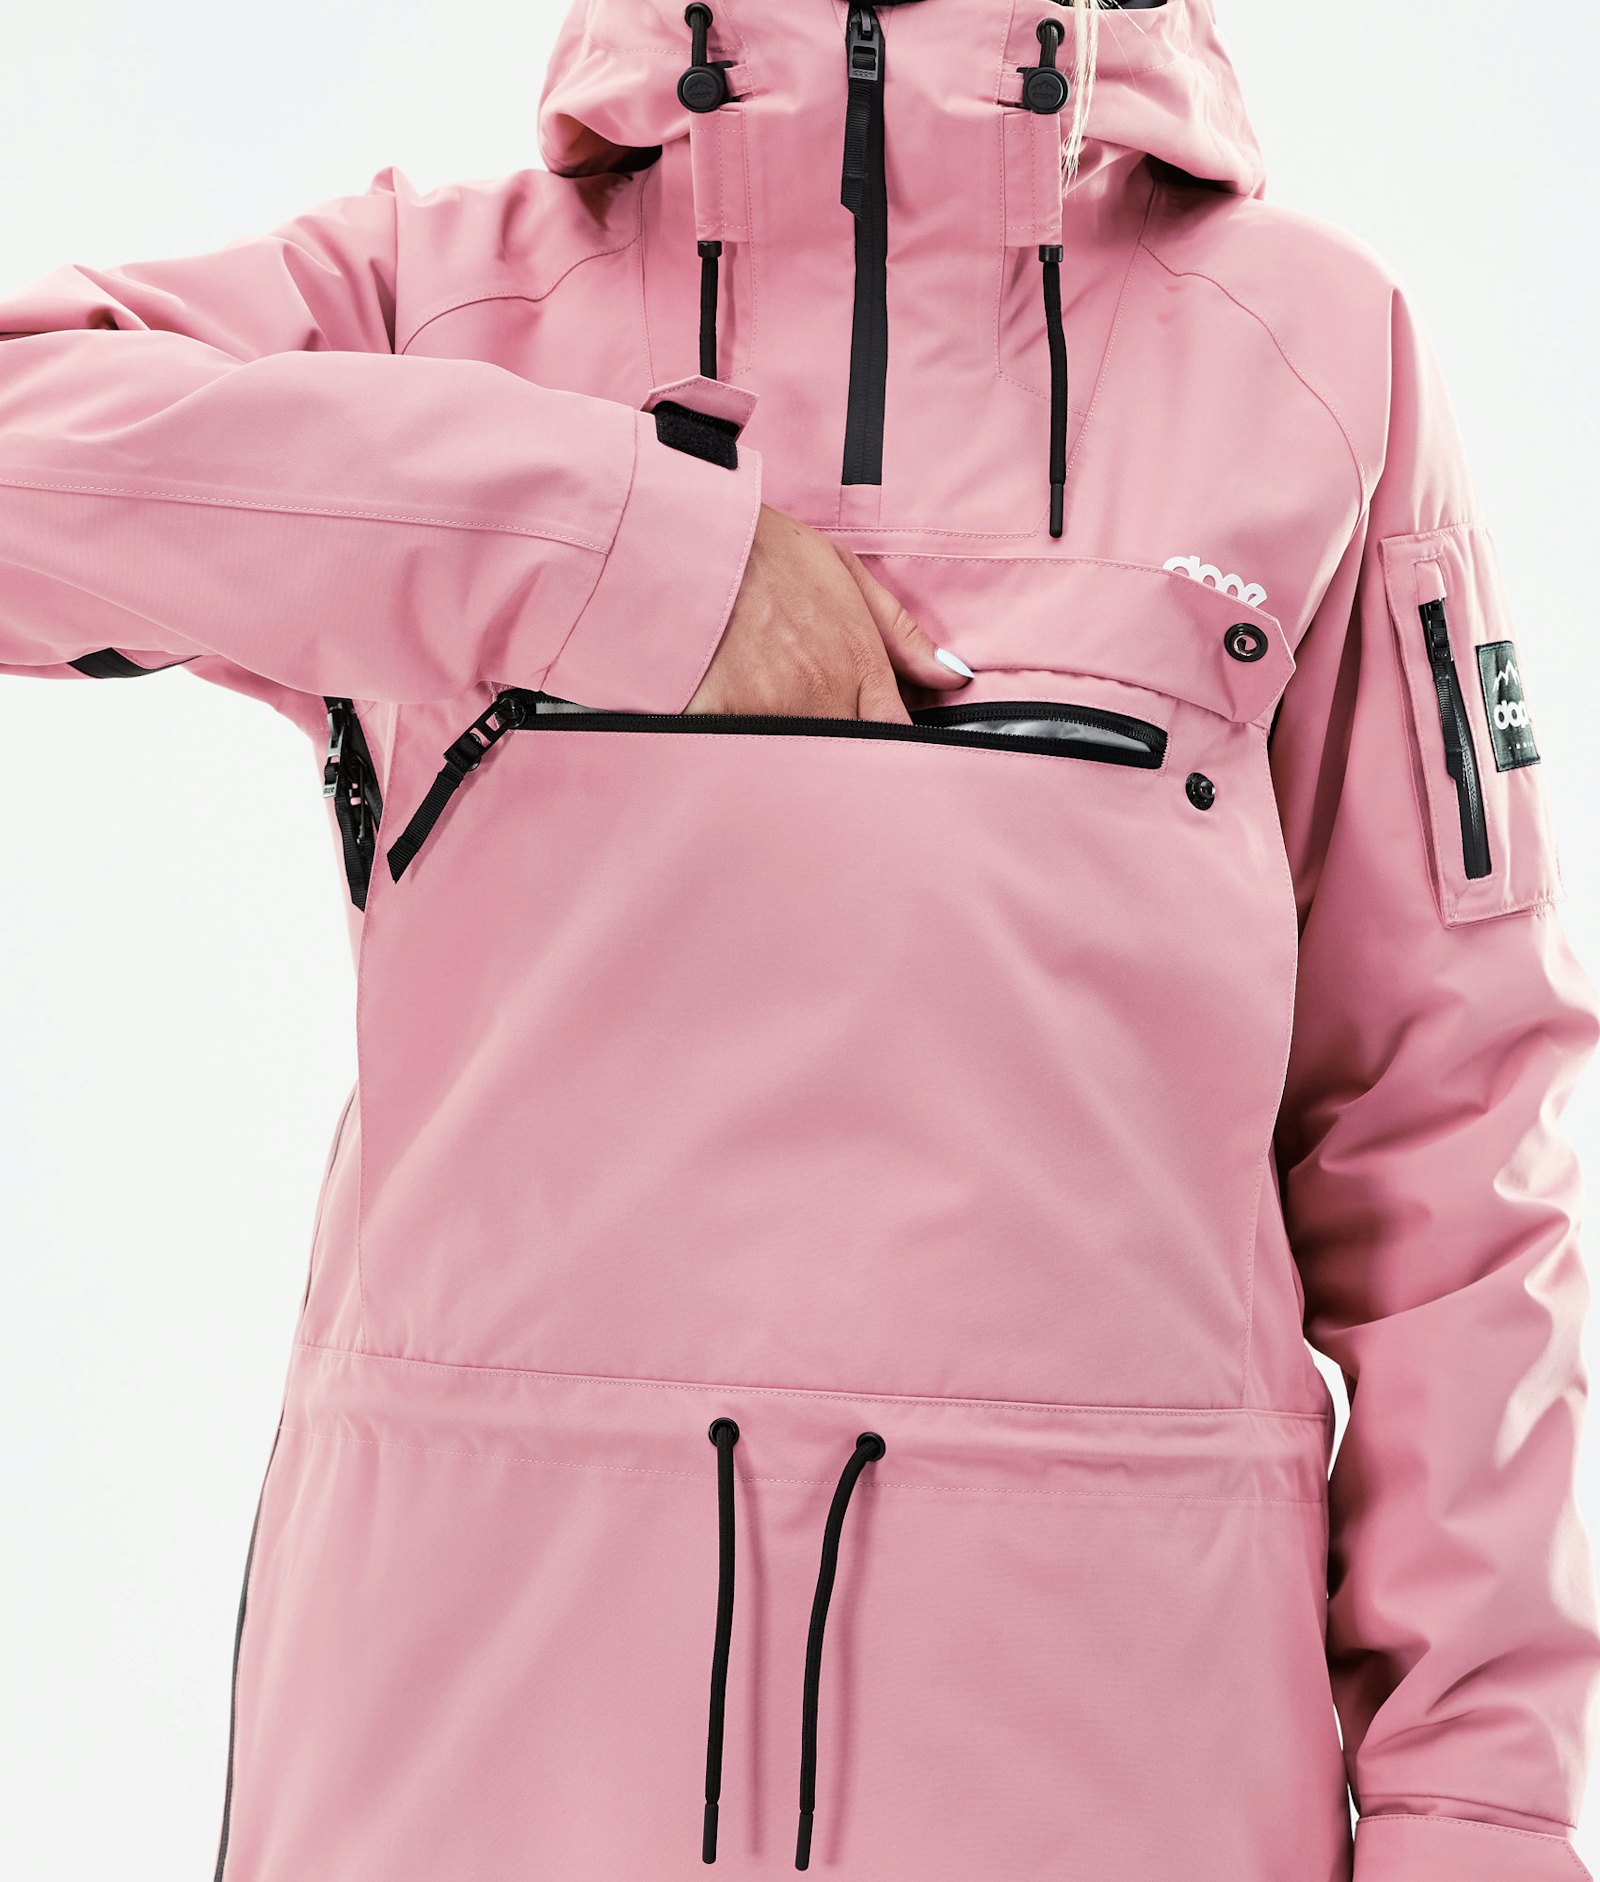 Annok W 2021 Veste de Ski Femme Pink